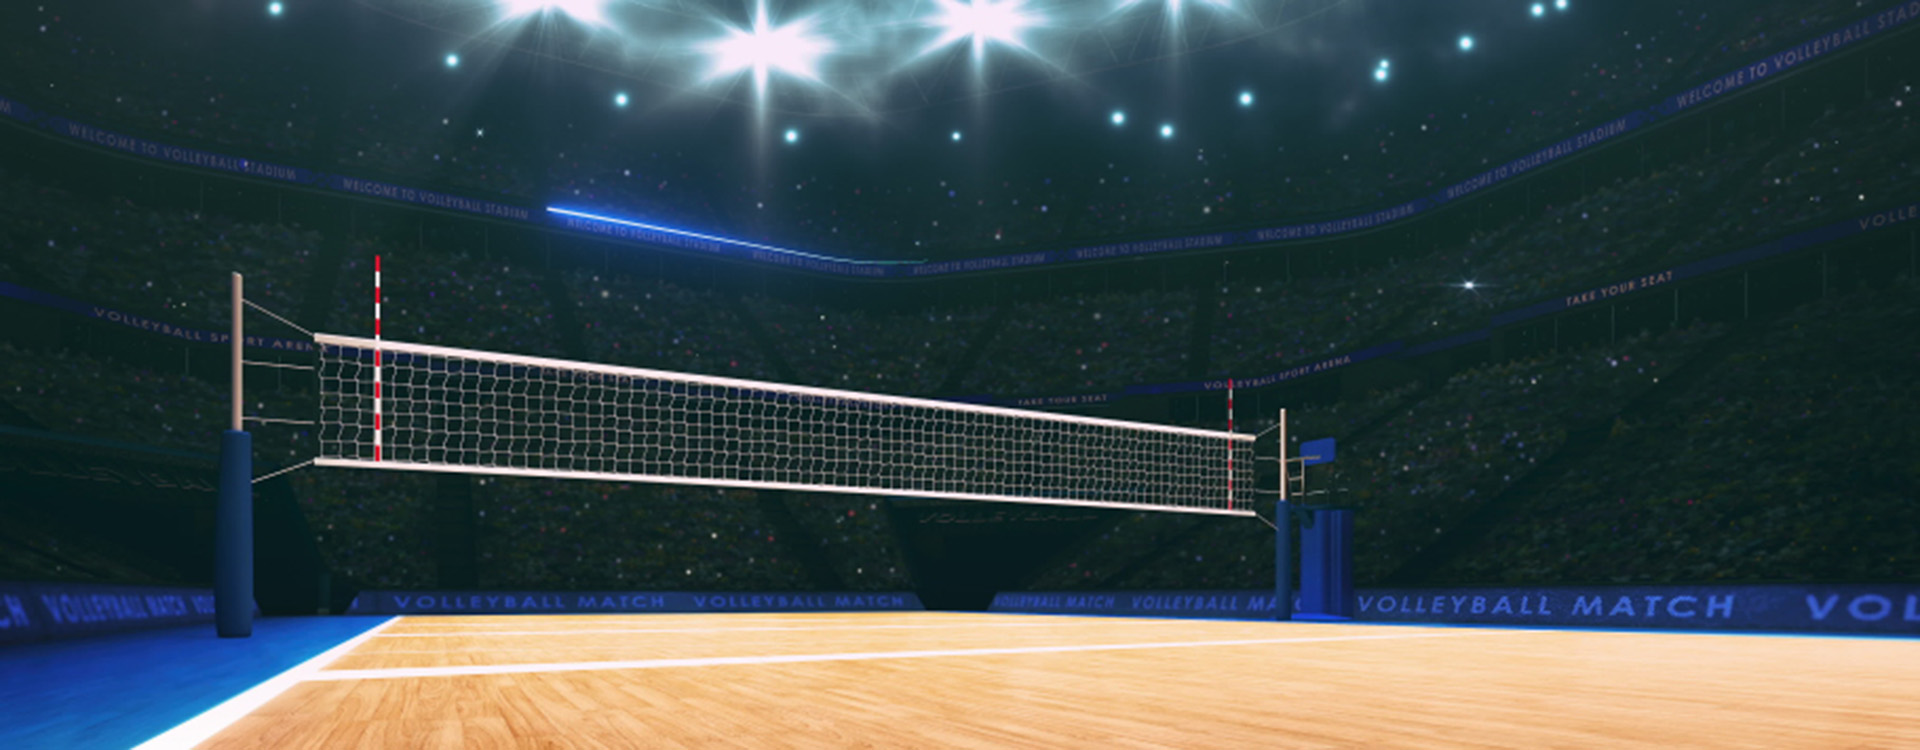 Boleibol Court2